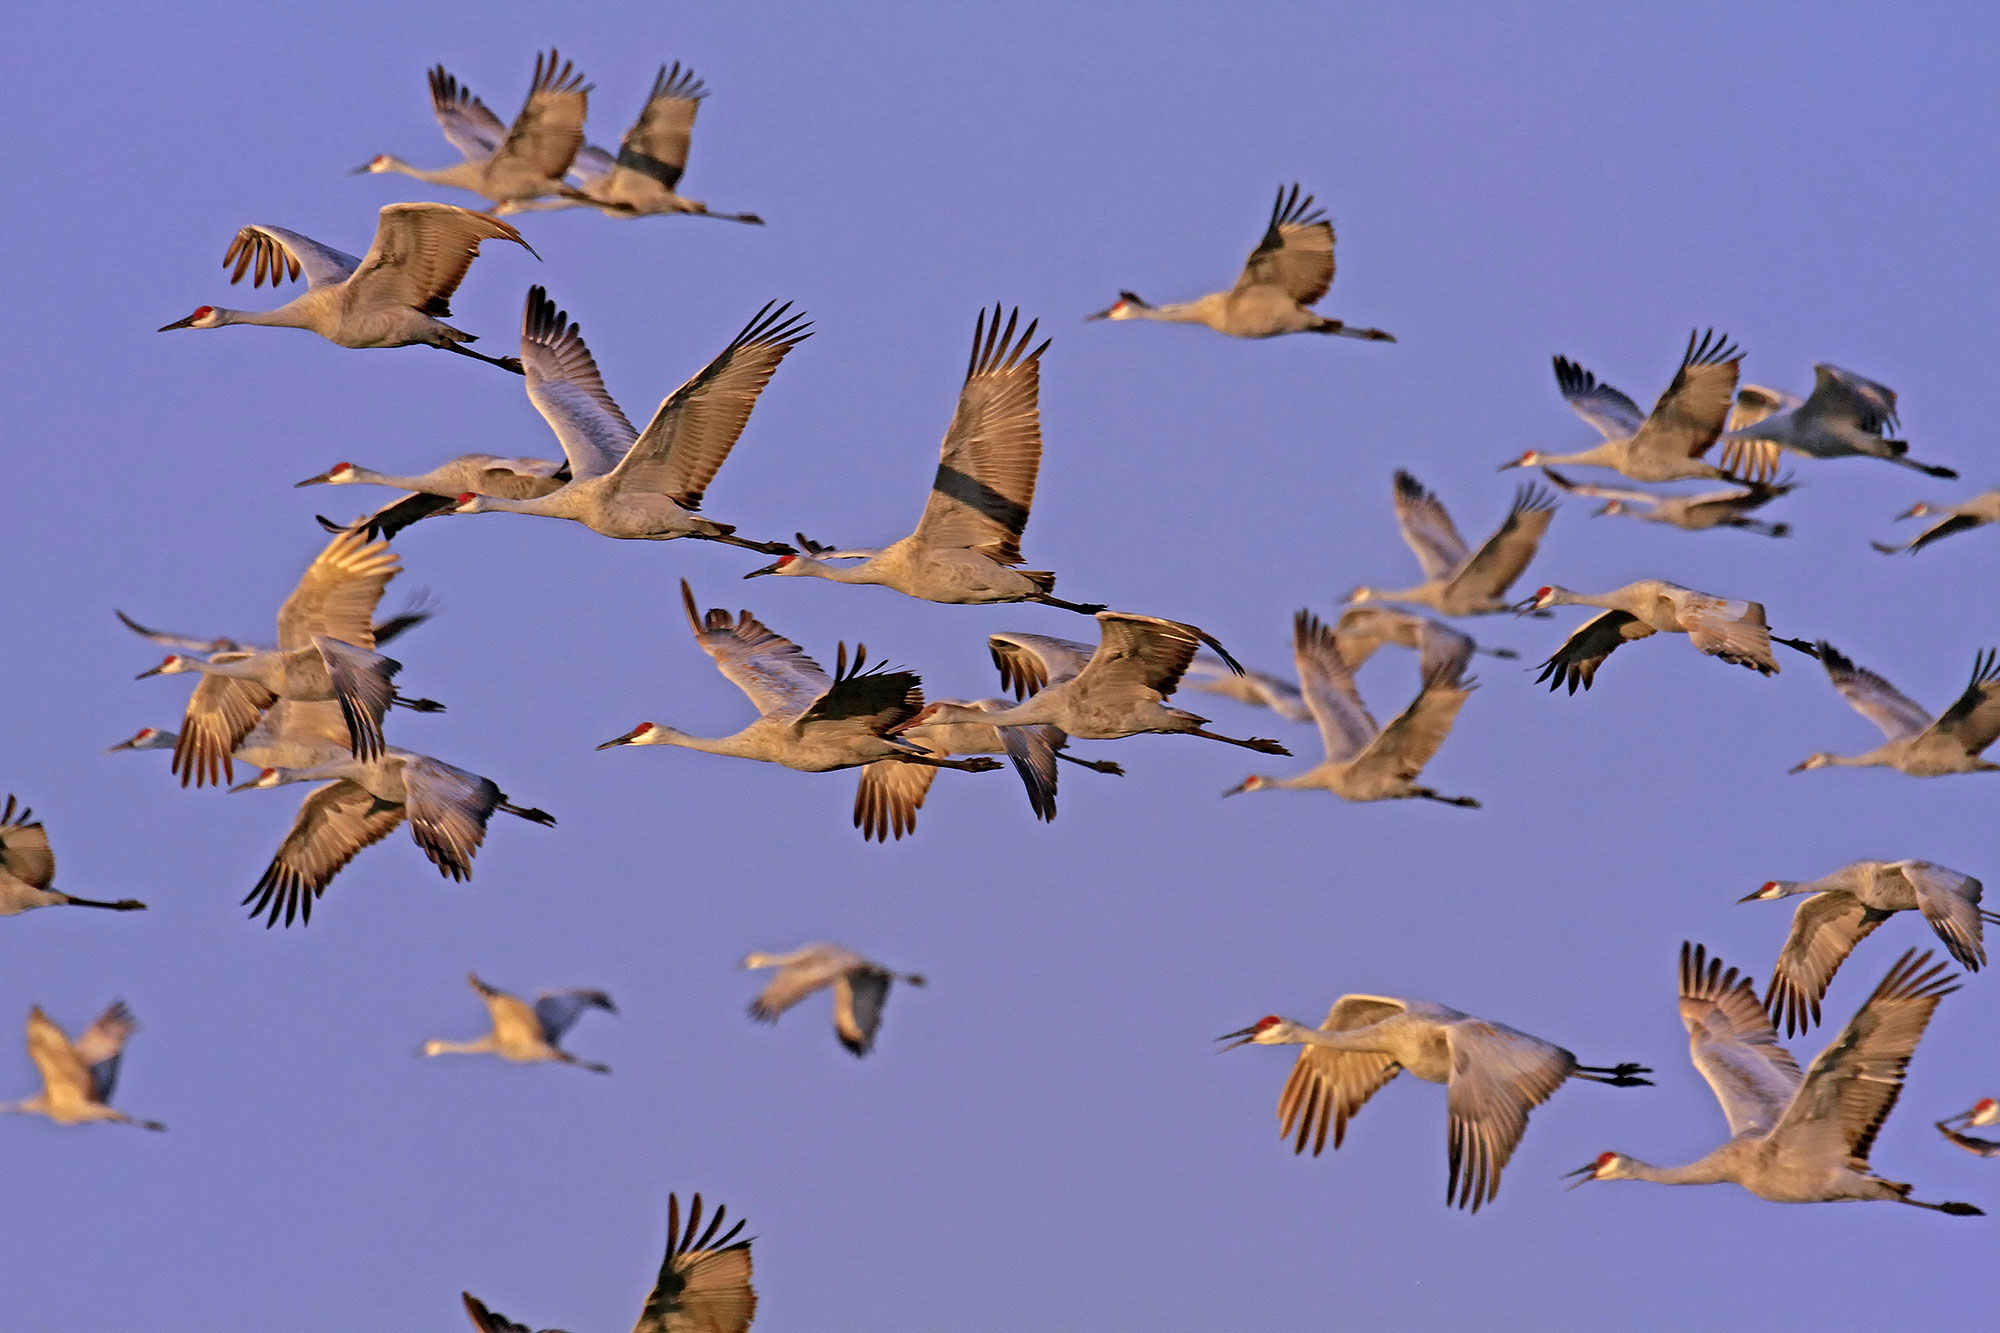 Sandhill cranes in flight.